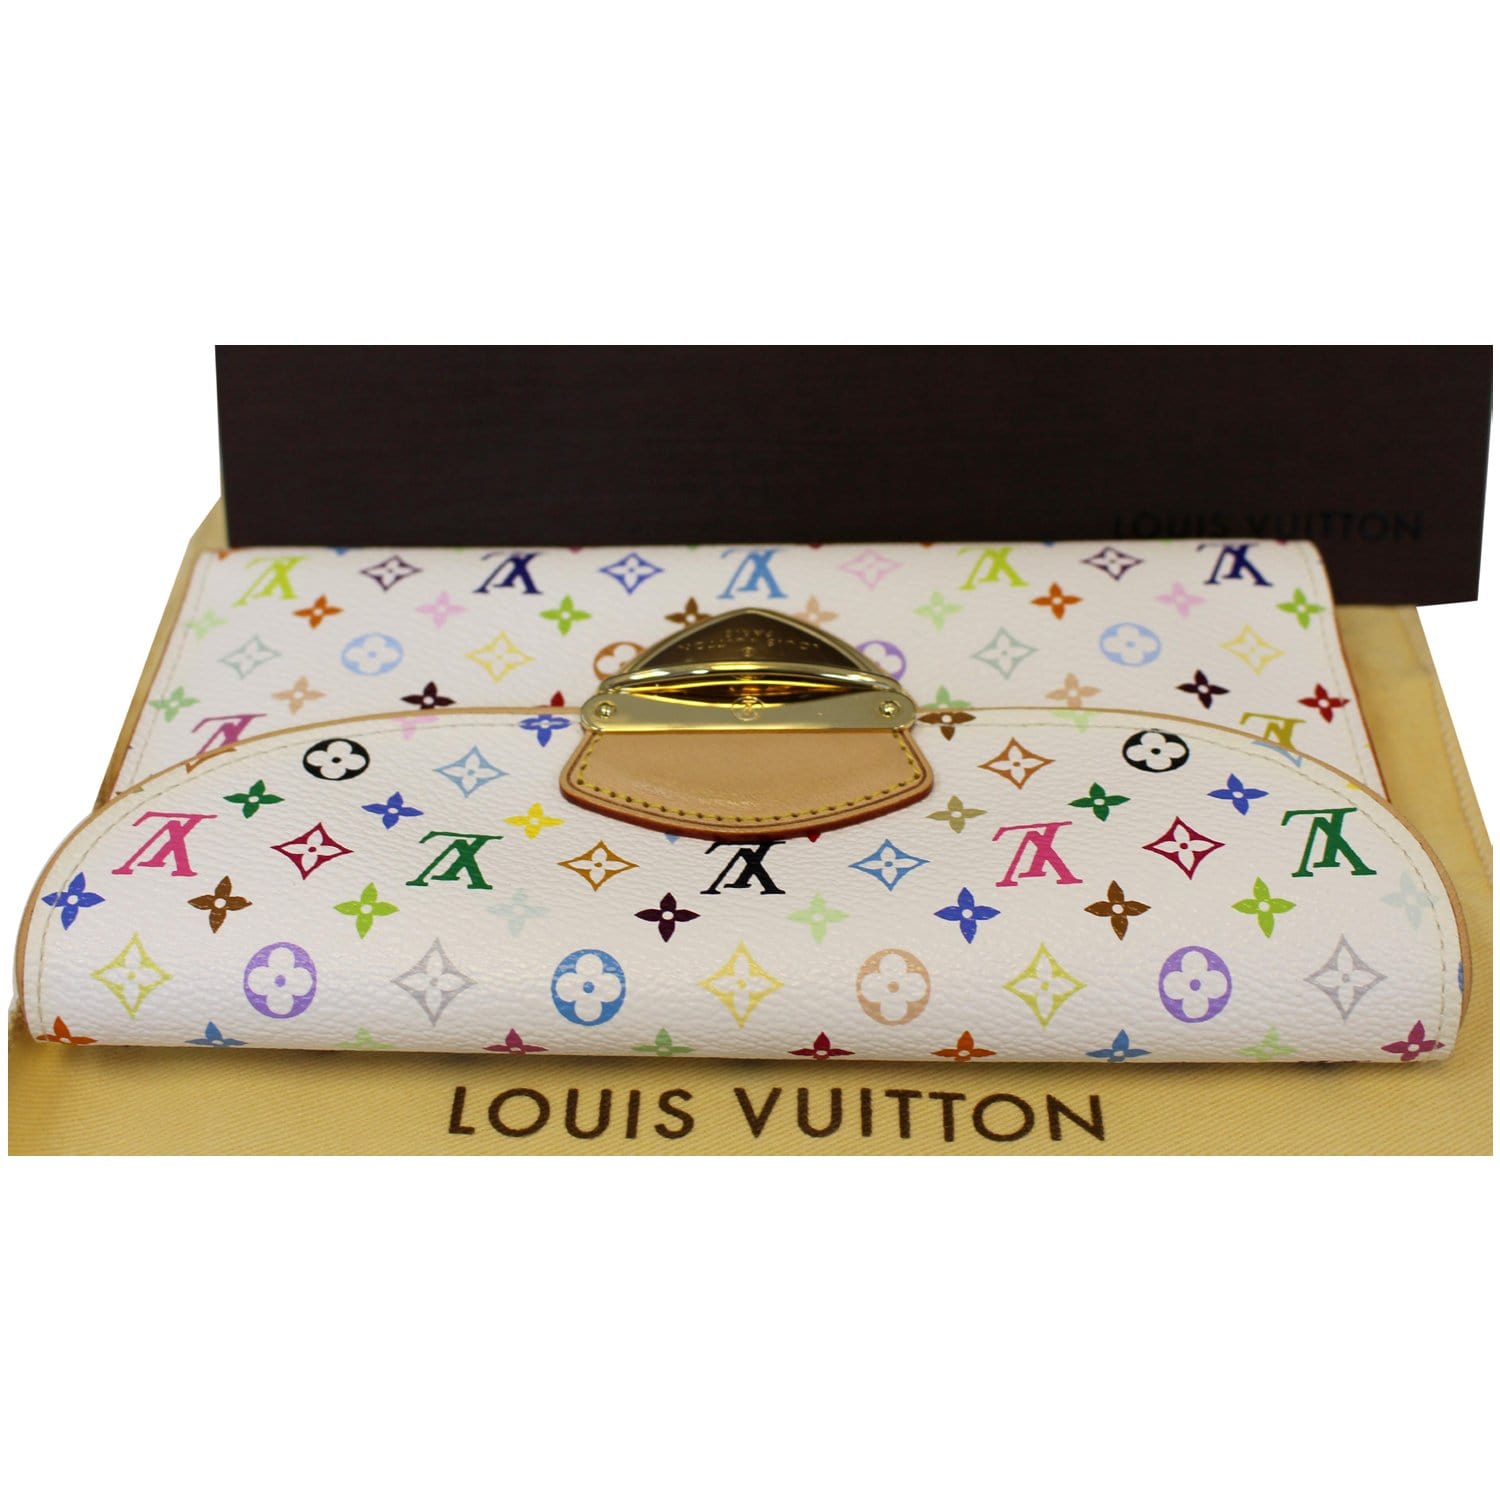 LOUIS VUITTON Eugenie Monogram Multicolor Wallet-US